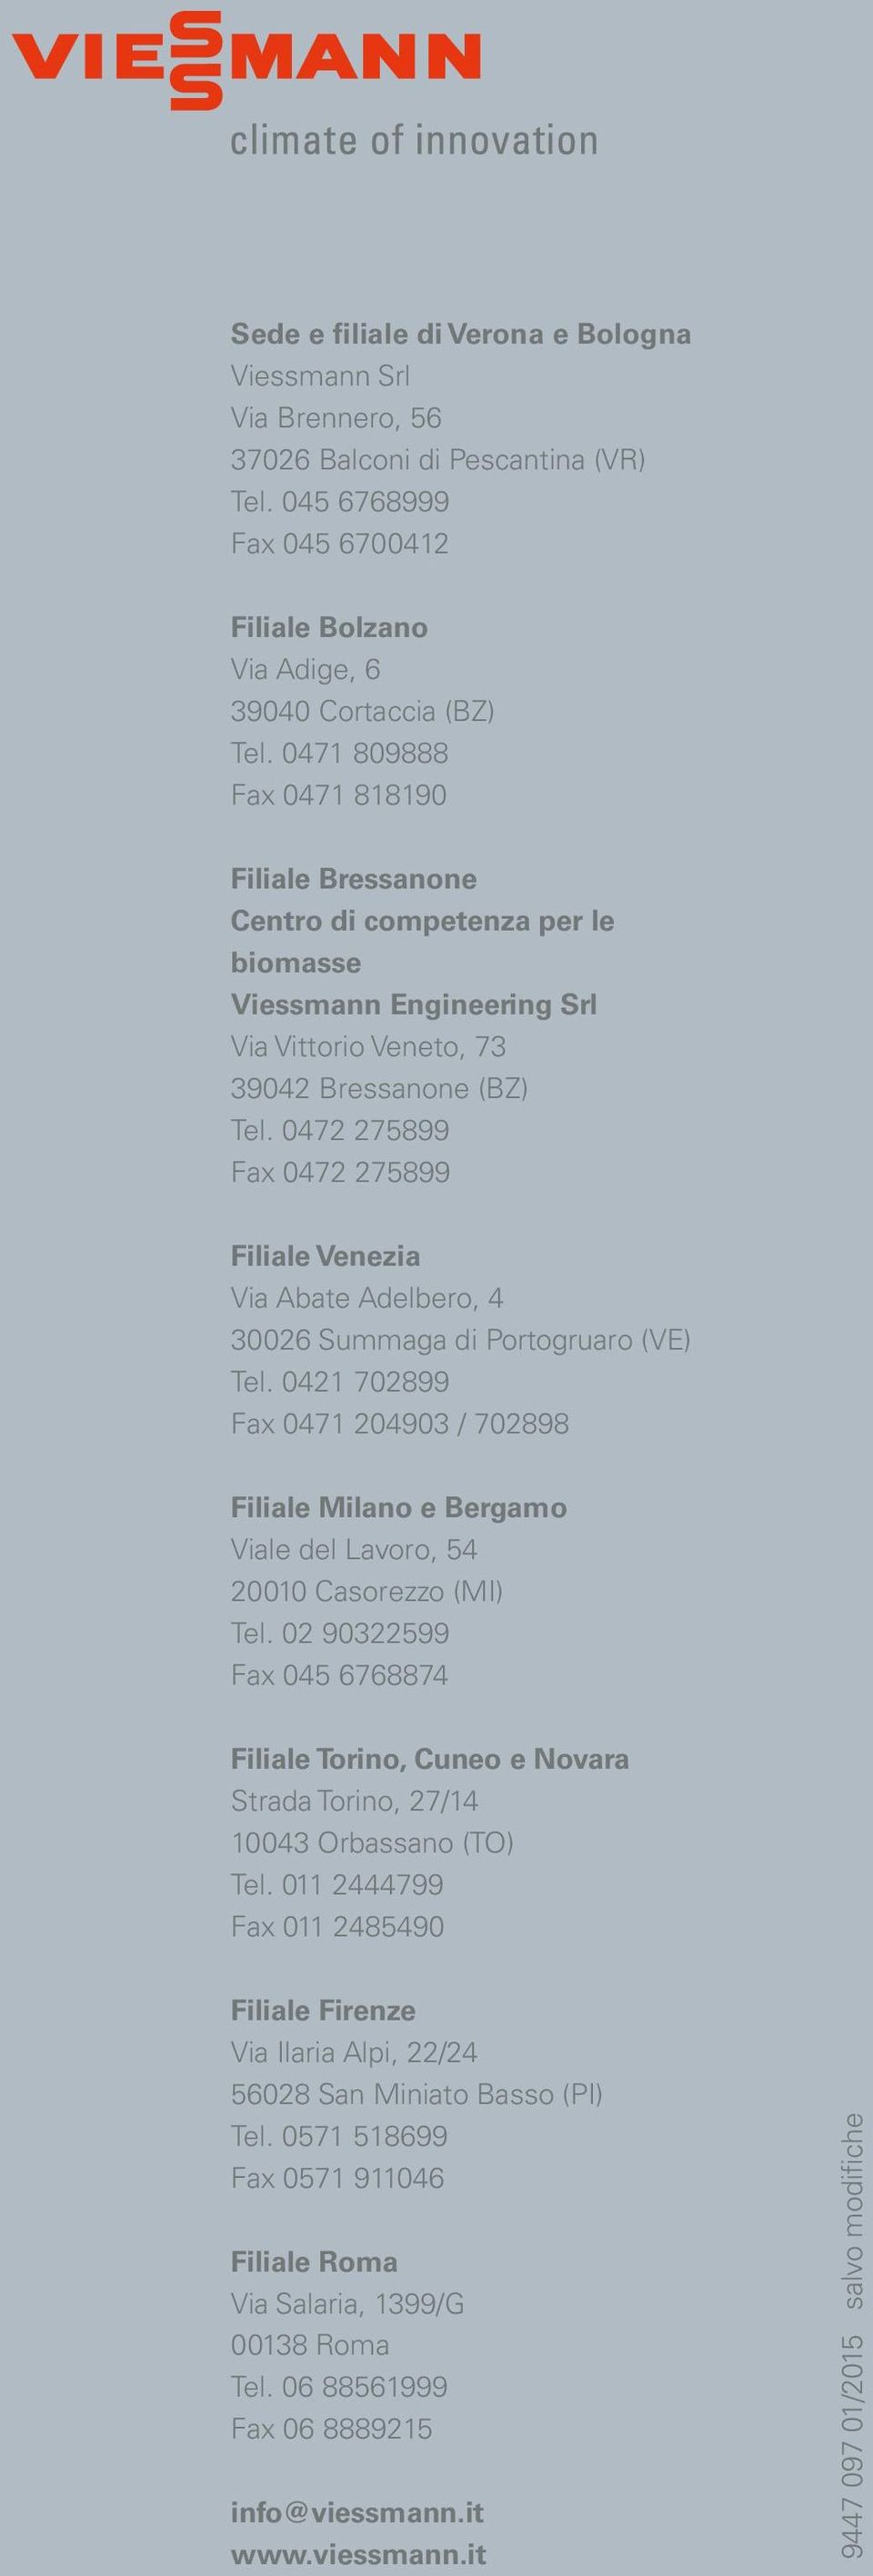 0472 275899 Fax 0472 275899 Filiale Venezia Via Abate Adelbero, 4 30026 Summaga di Portogruaro (VE) Tel.